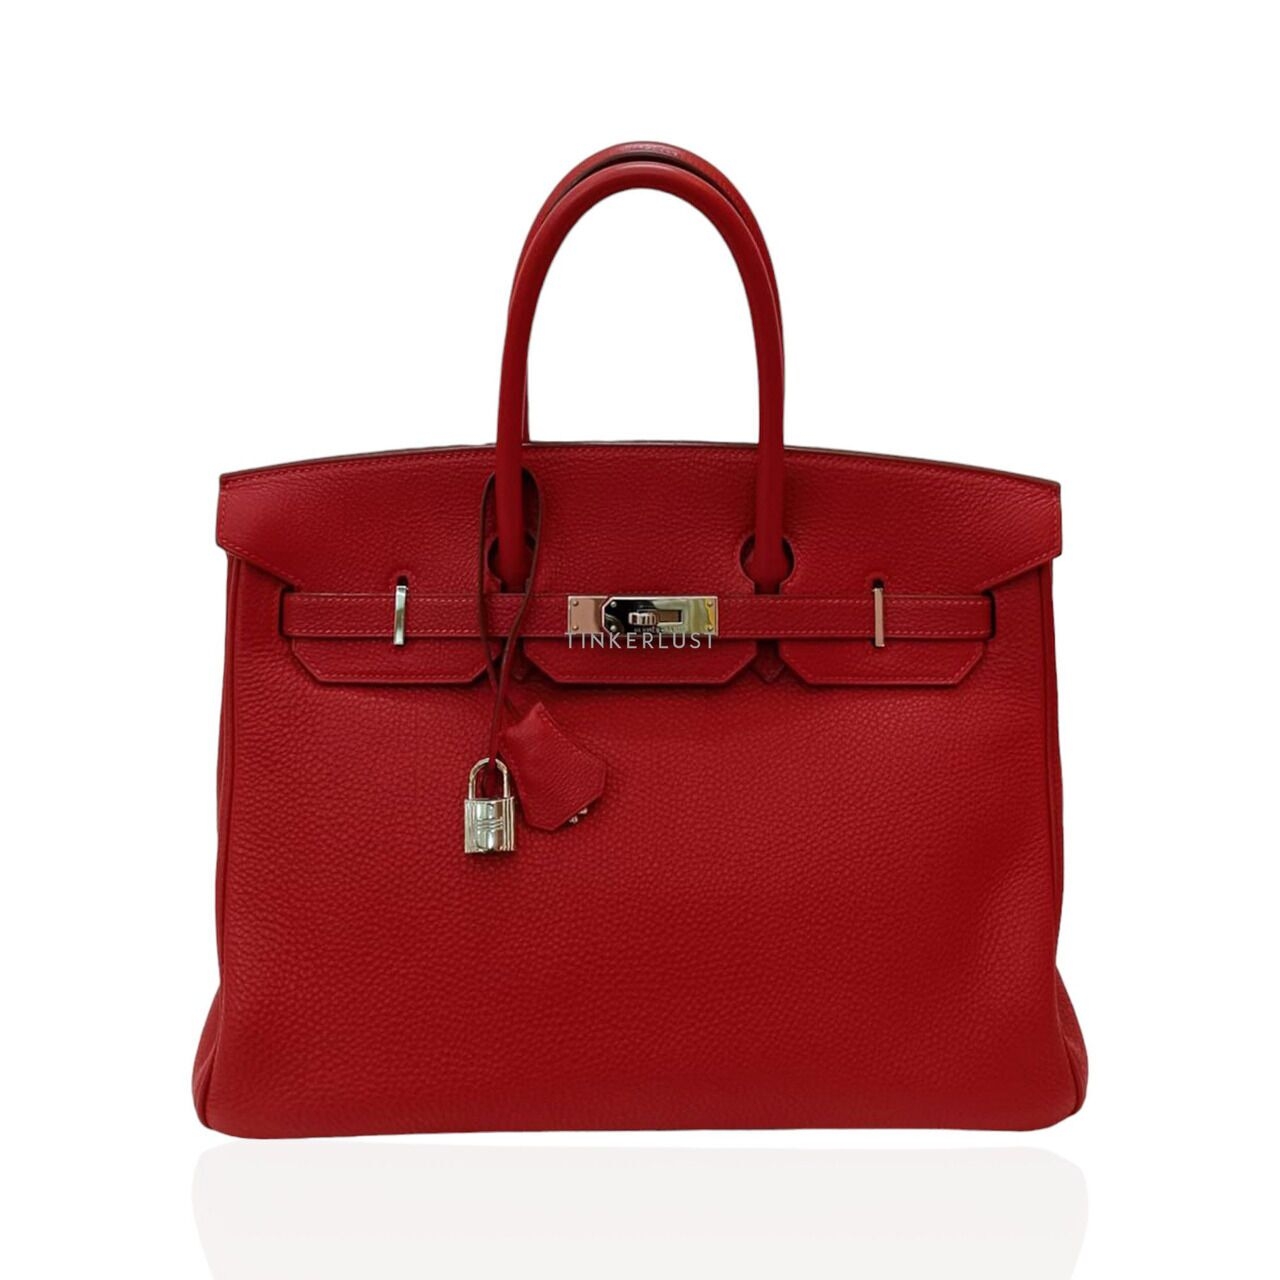 Hermes Birkin 35 Rouge Geranium Togo Leather #I 2005 PHW Handbag